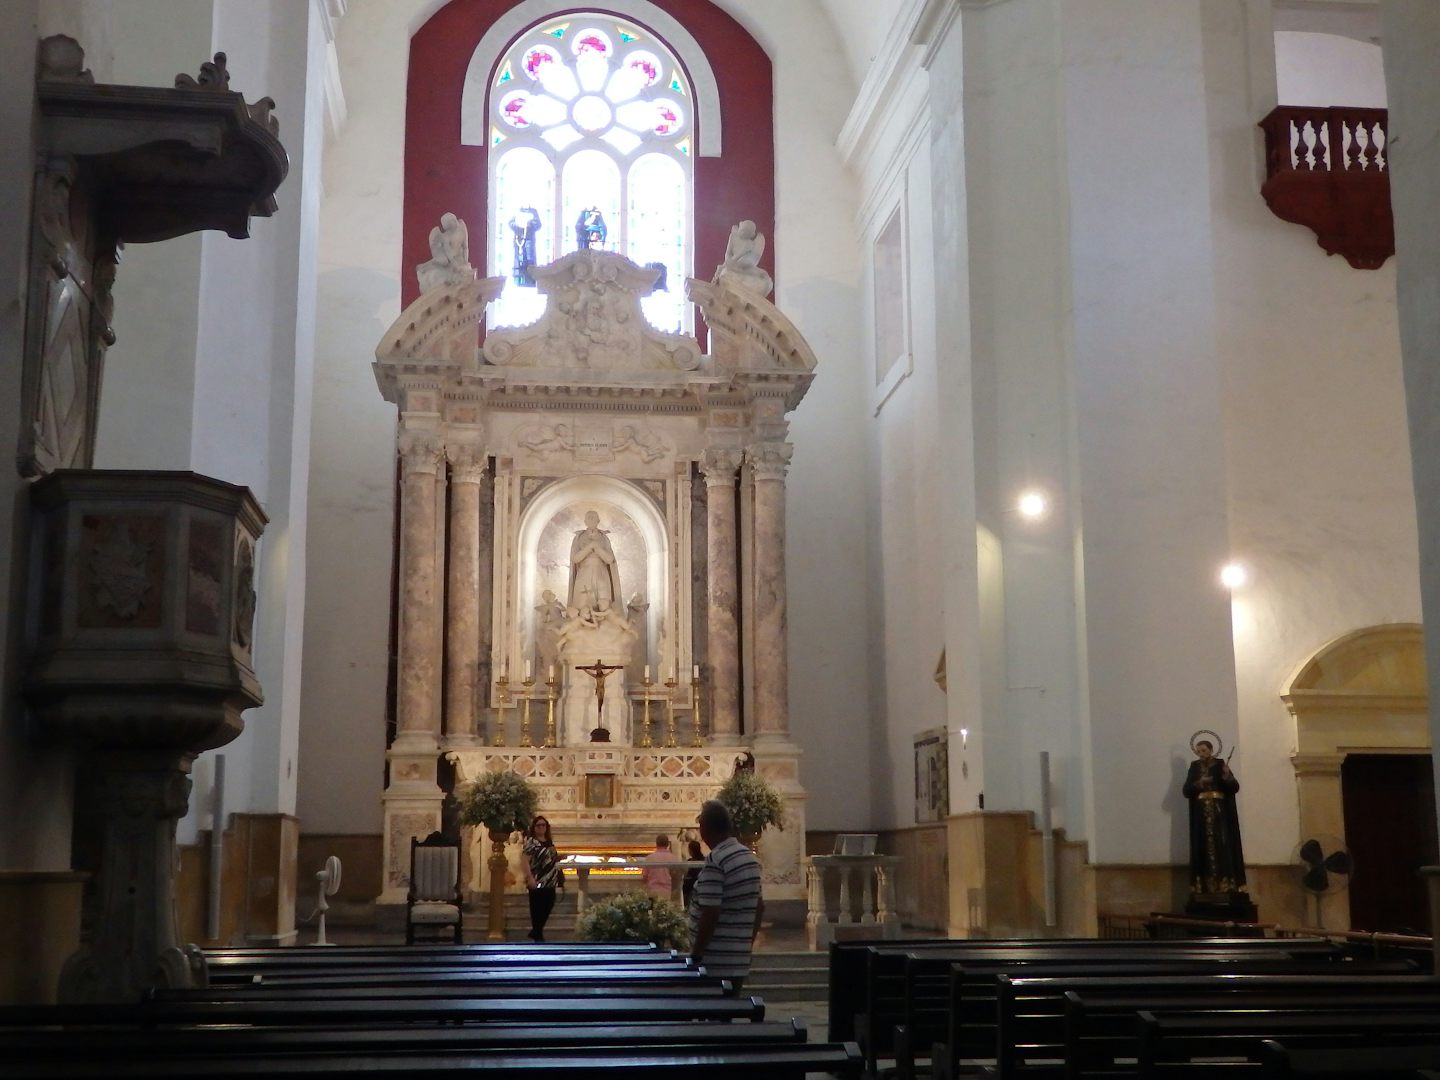 Church in Old City of Cartegena